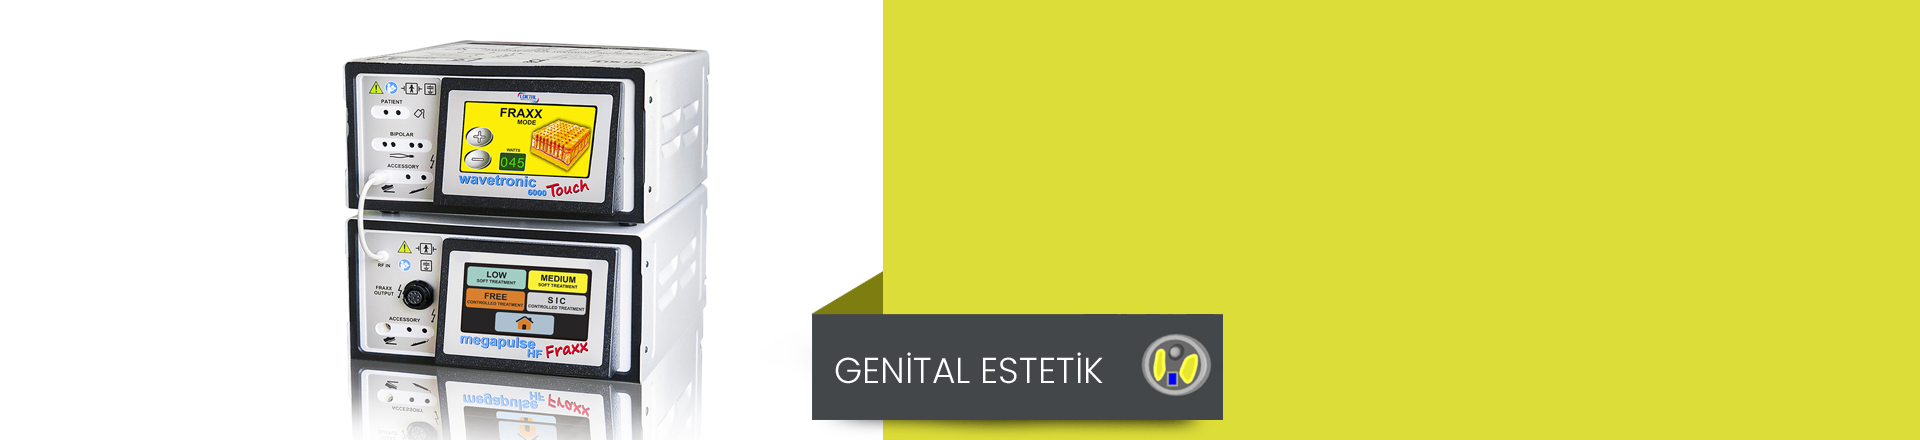 Genital Estetik